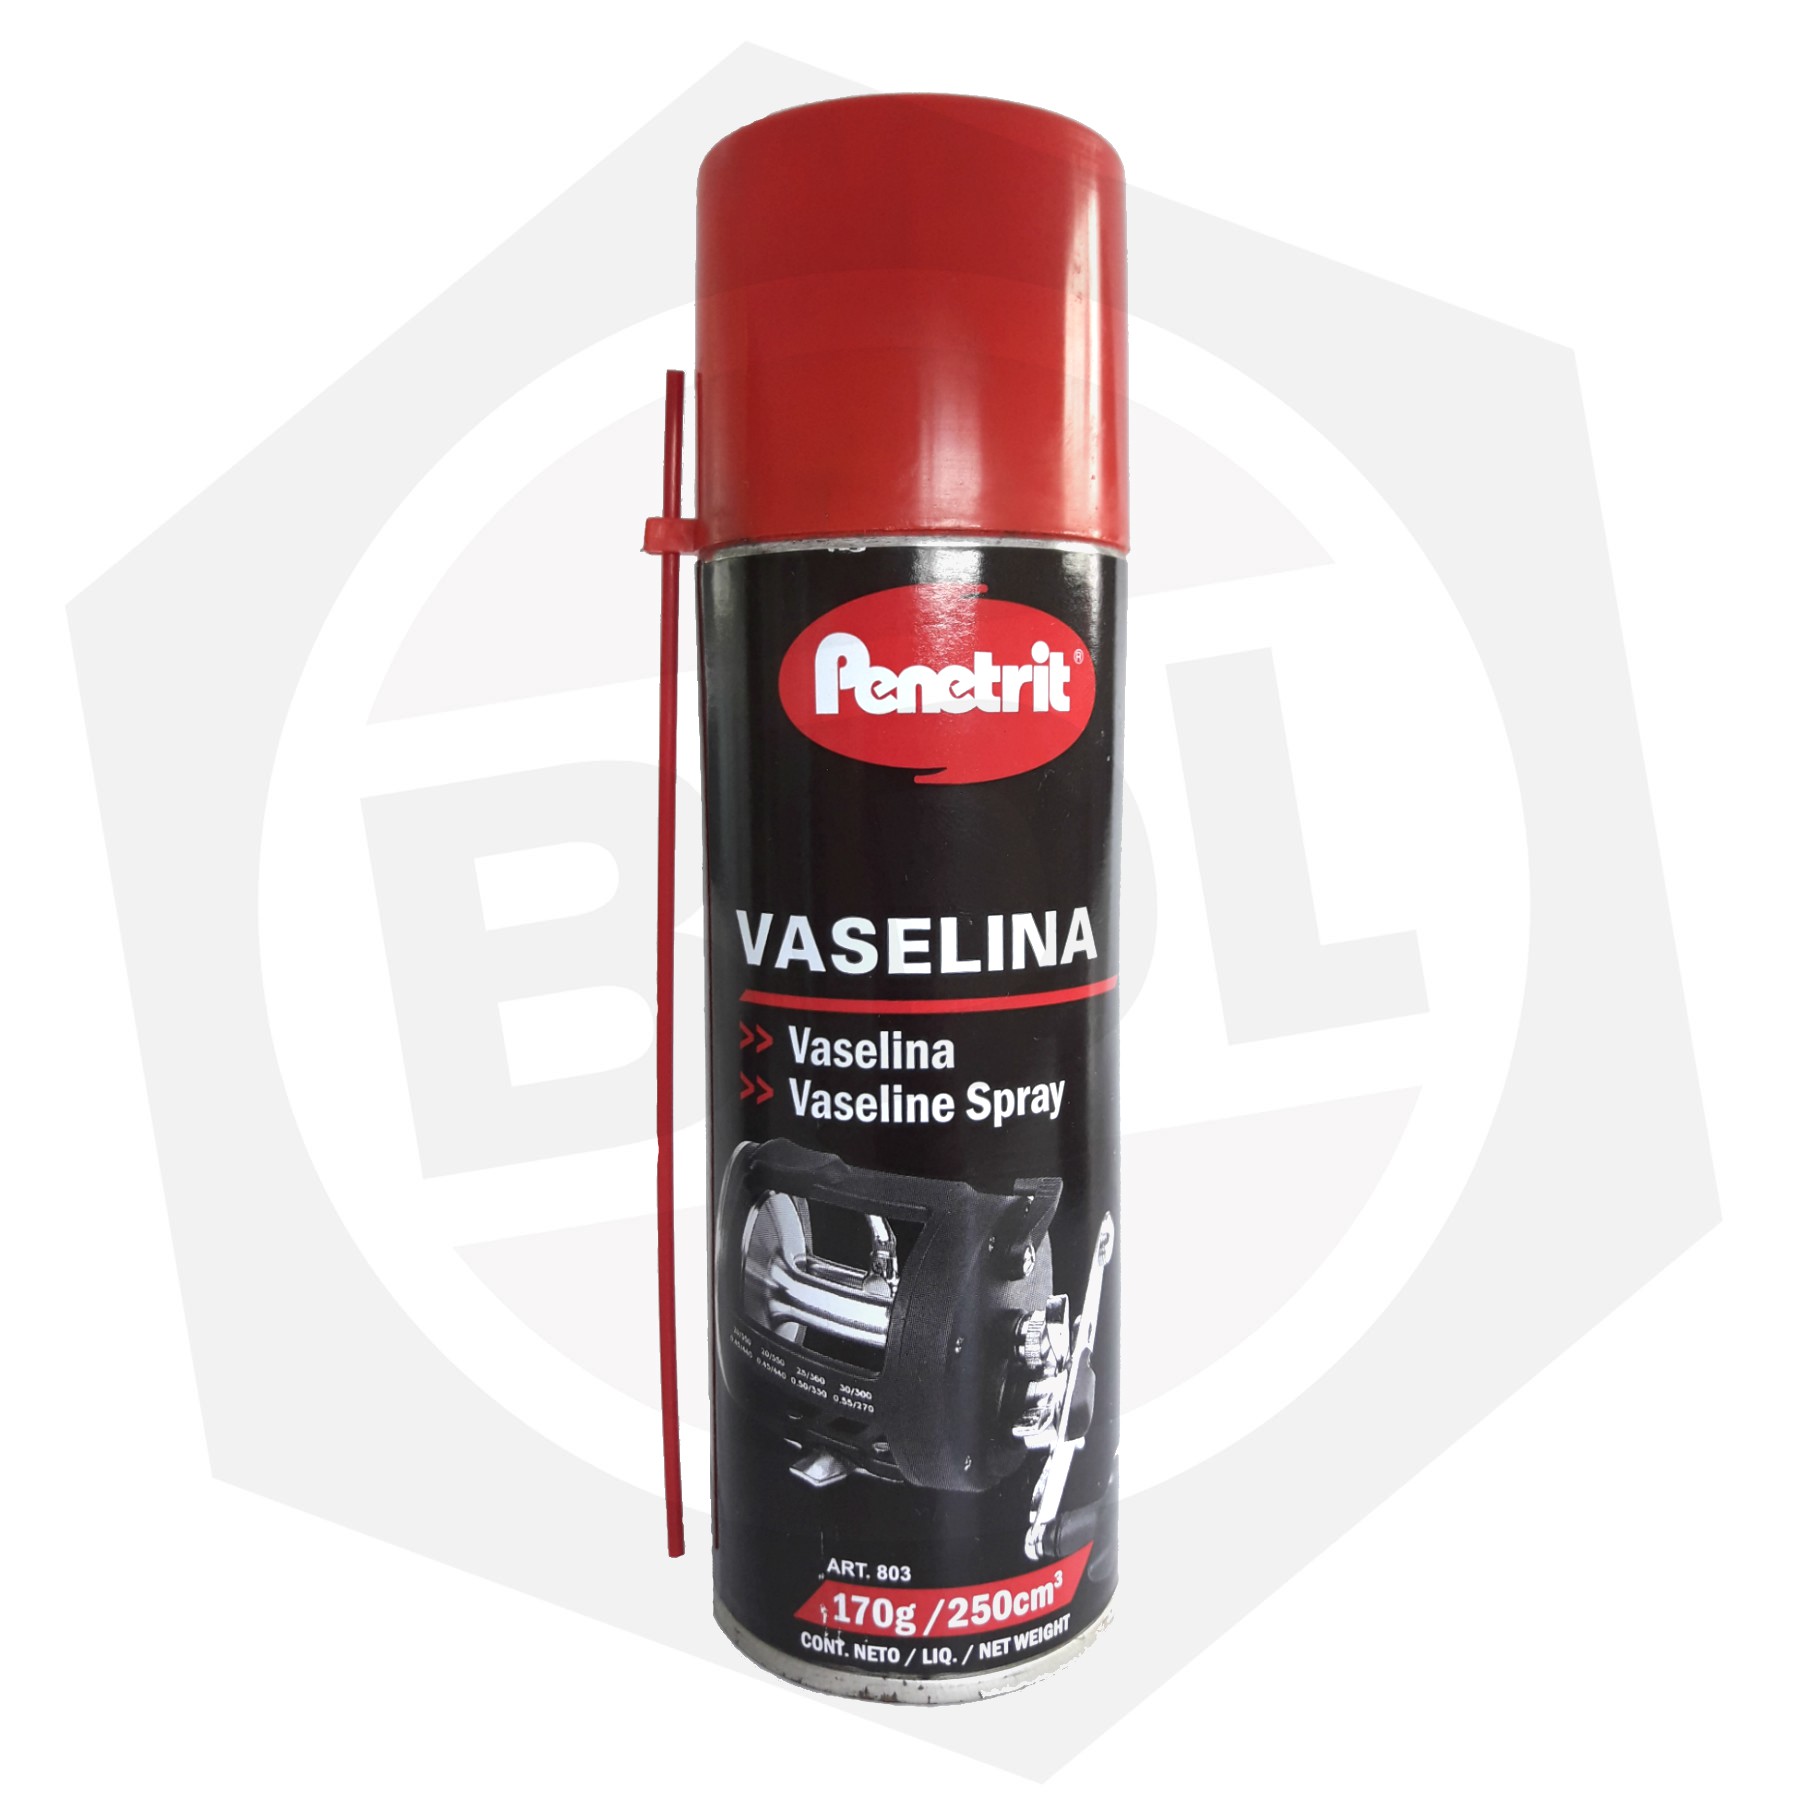 Lubricante Vaselina Incolora Penetrit N° 803 - 170 g / 250 cc